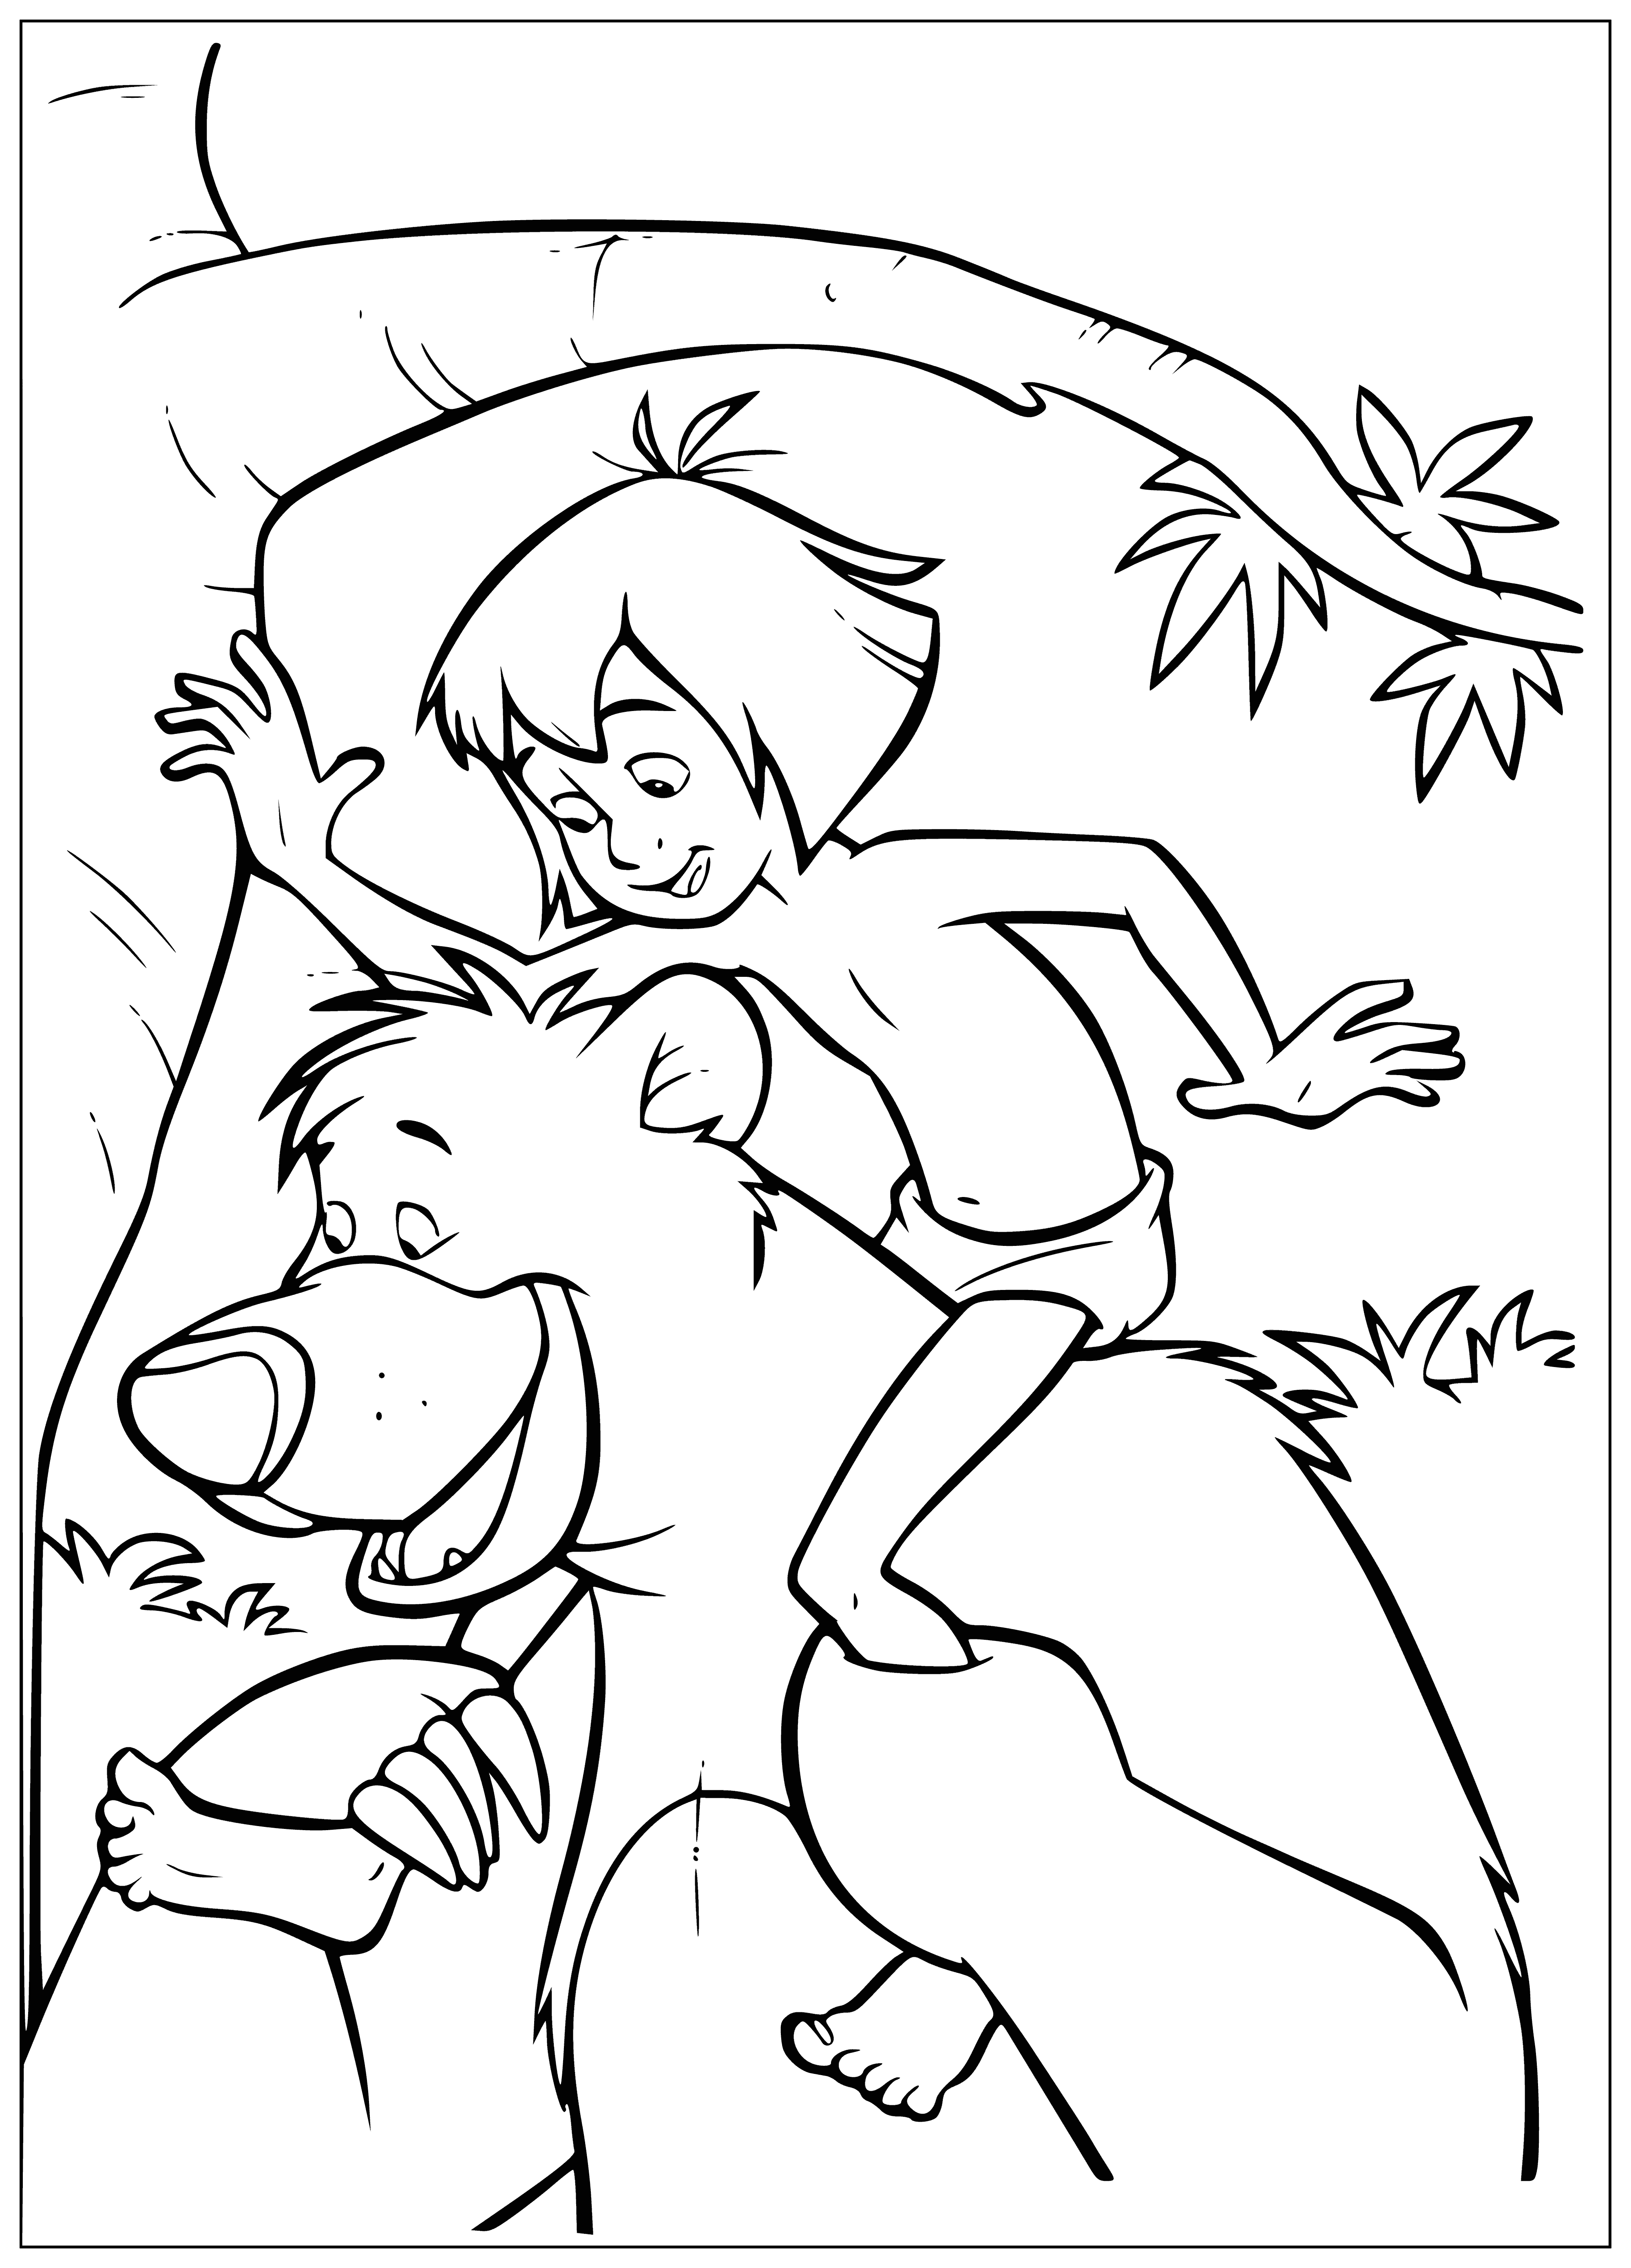 Mowgli and Baloo coloring page